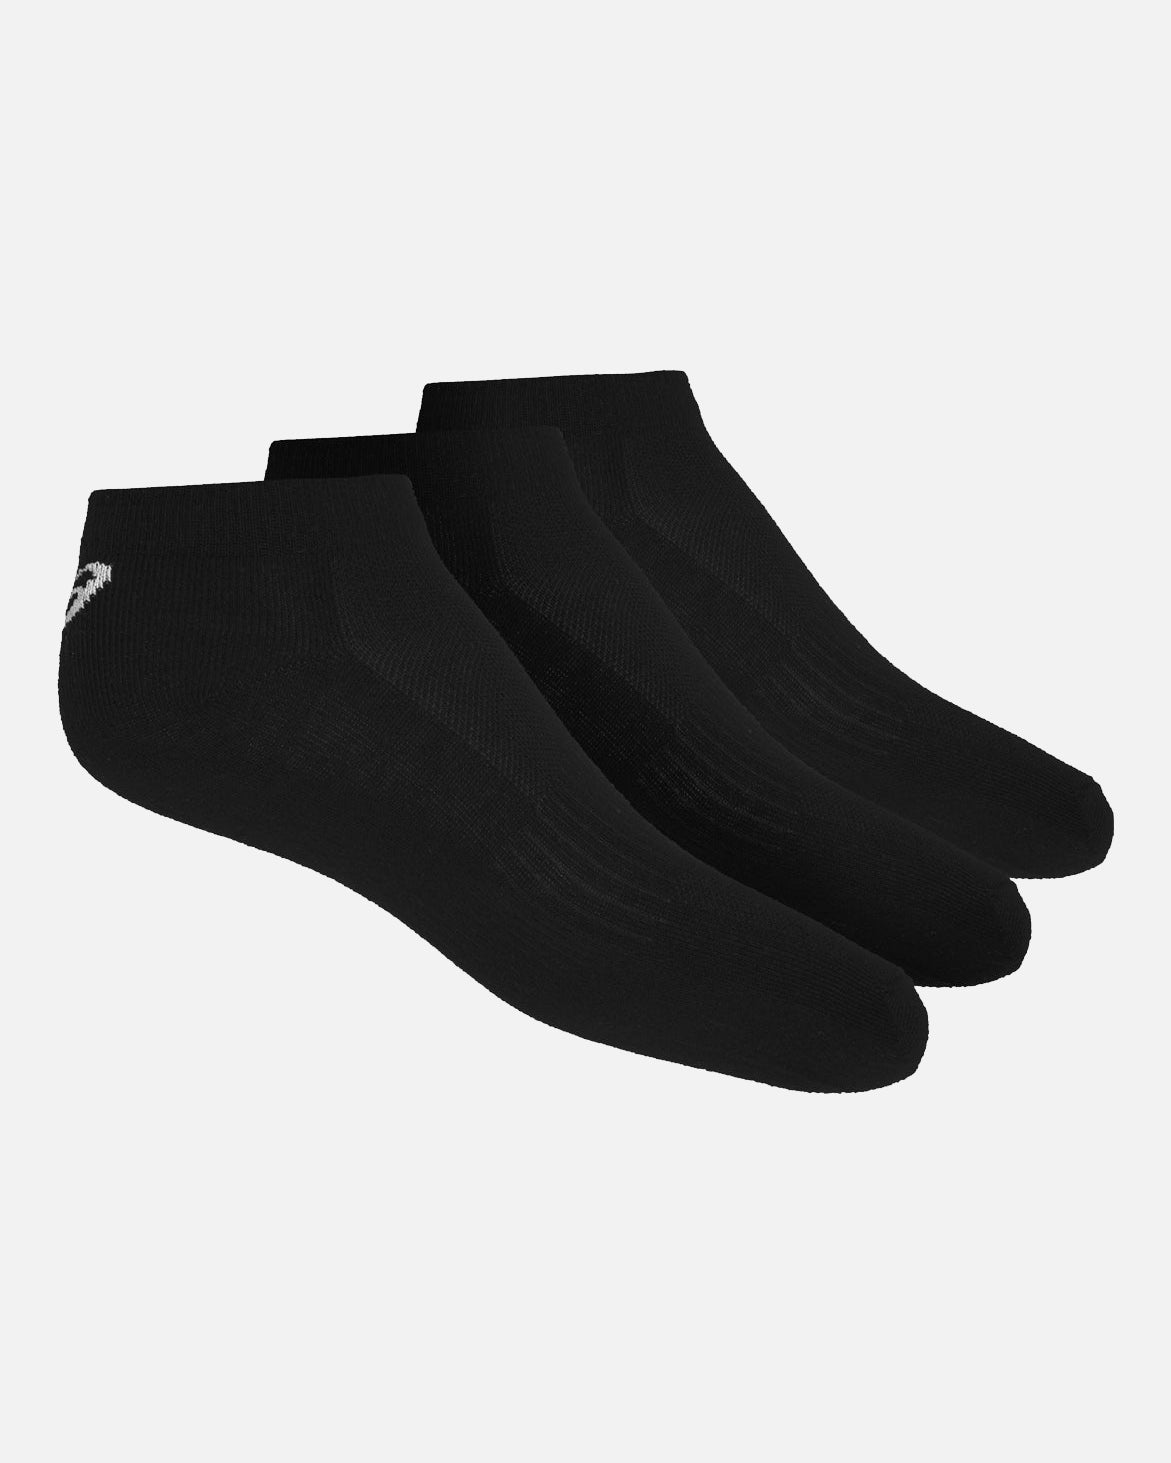 Packung mit 3 Paar kurzen Asics-Socken – Schwarz